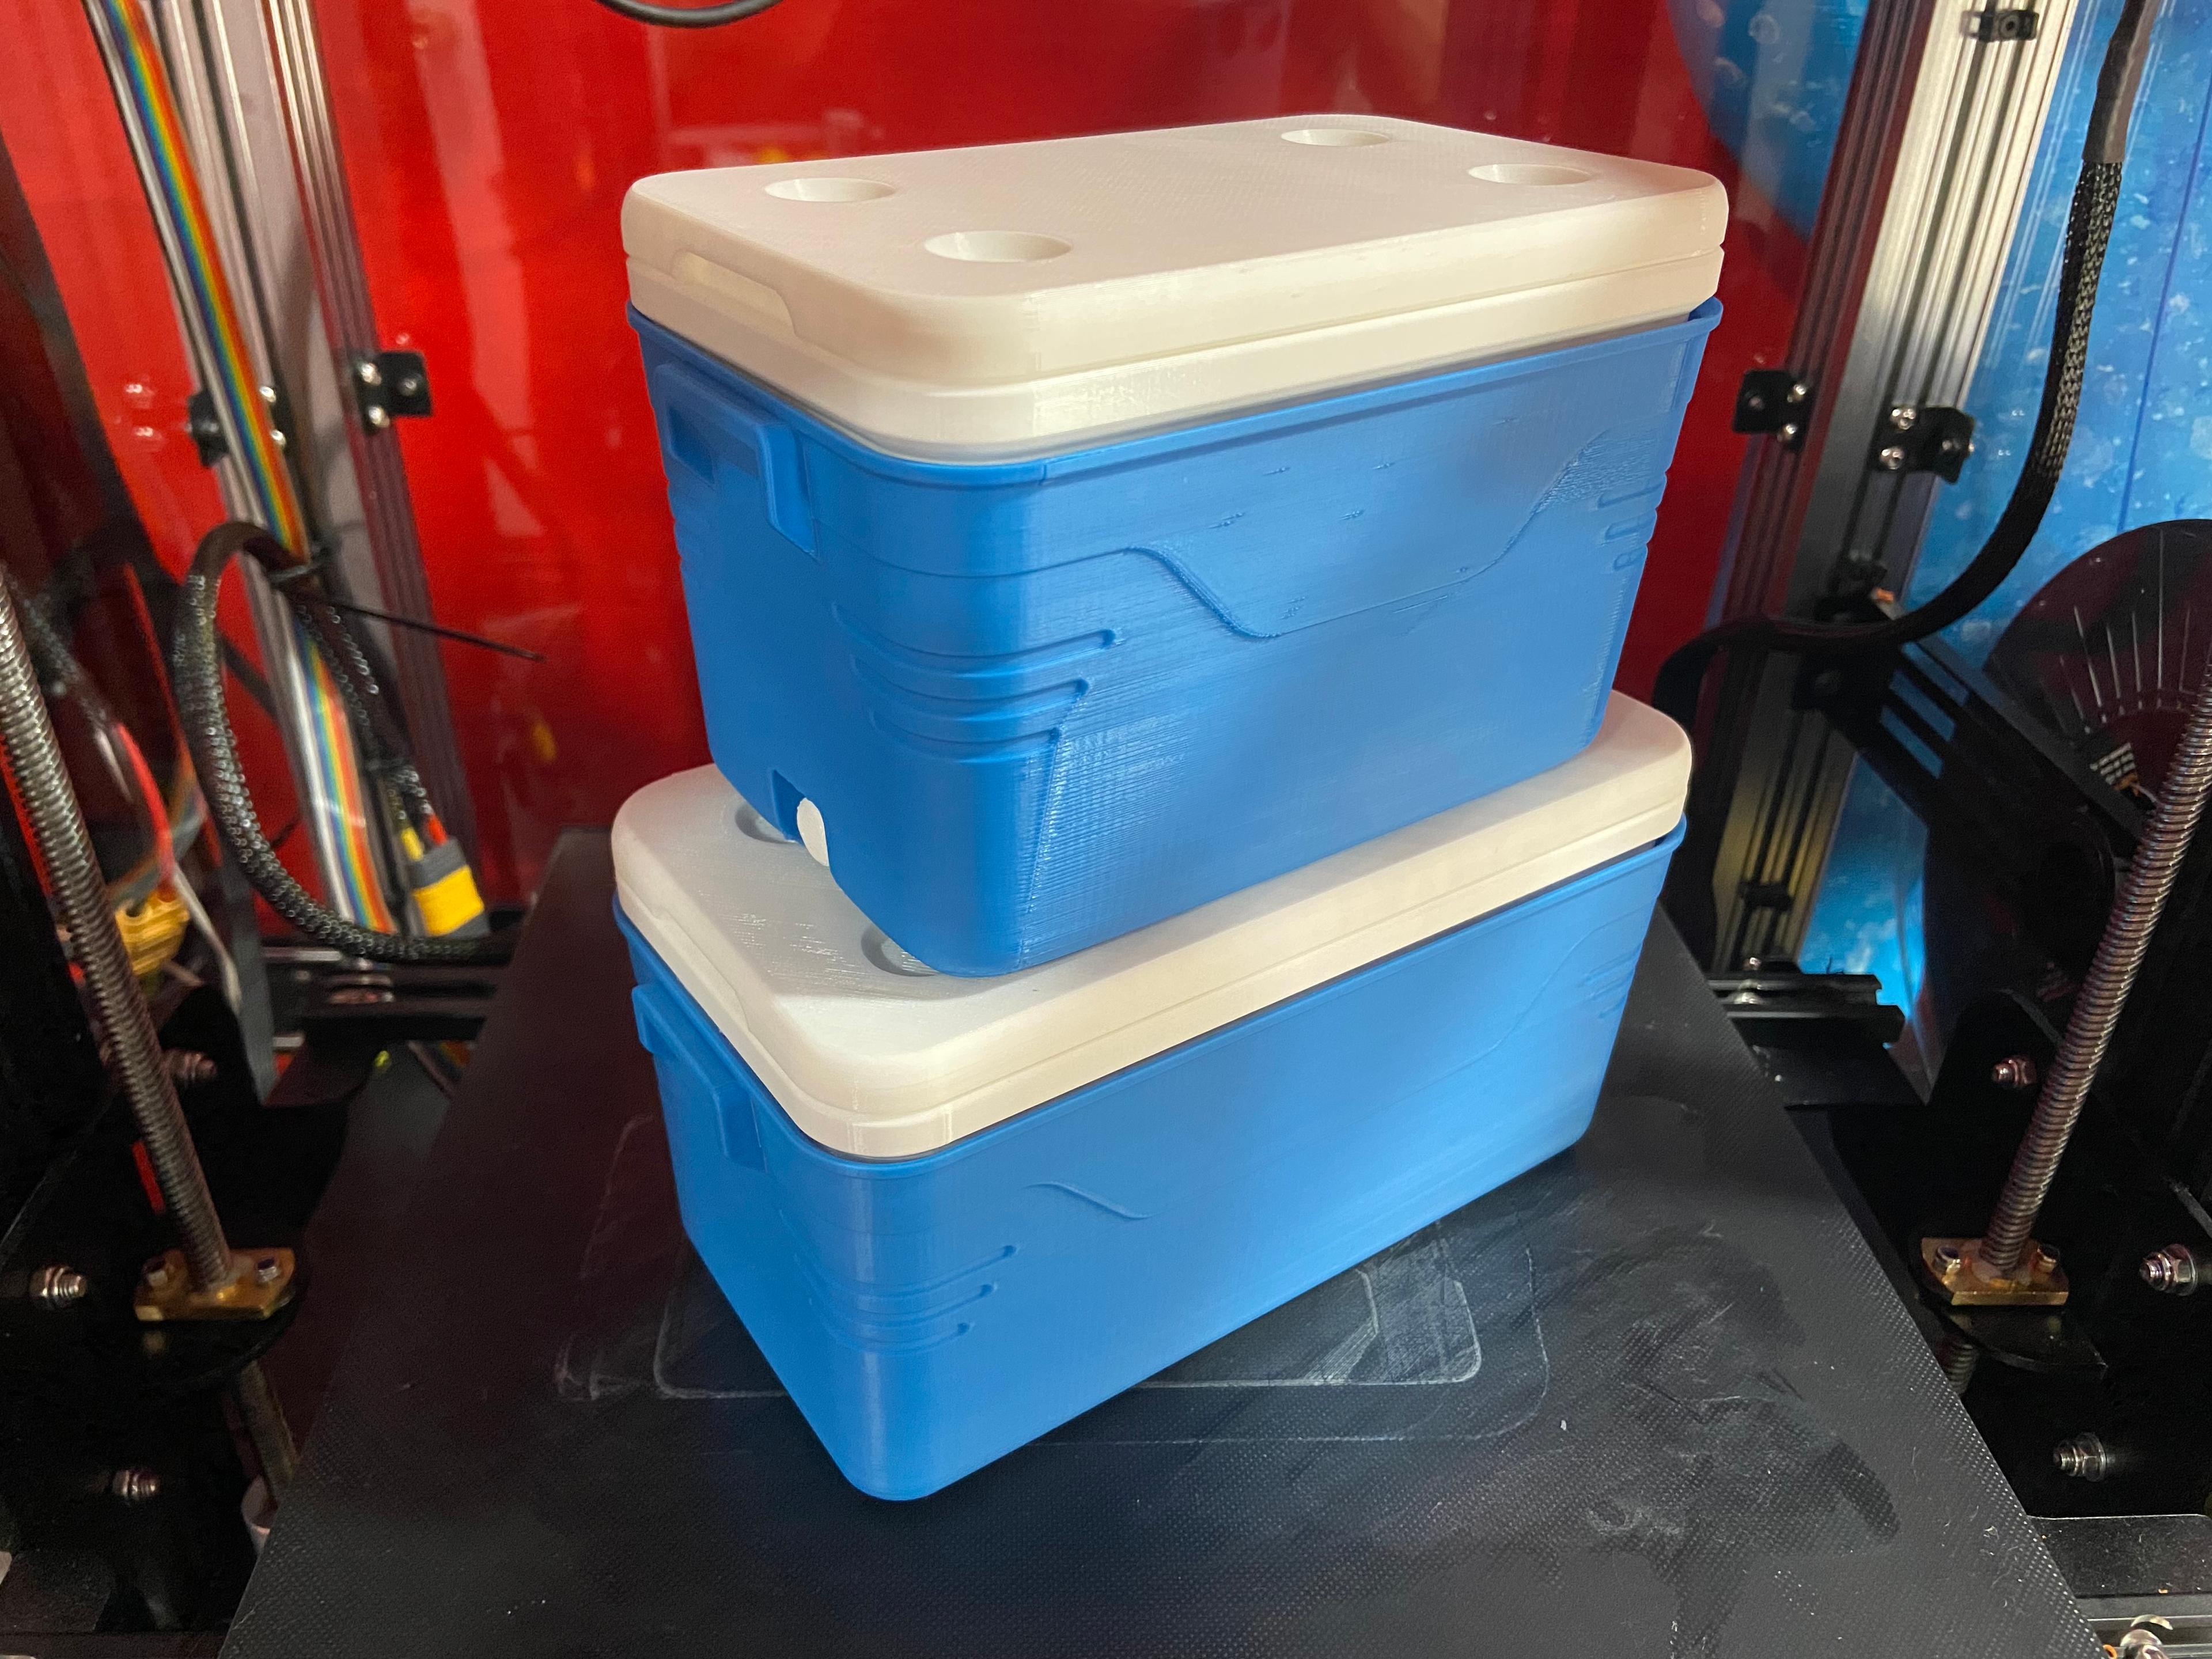 3D Print: One Can Cooler 3d model